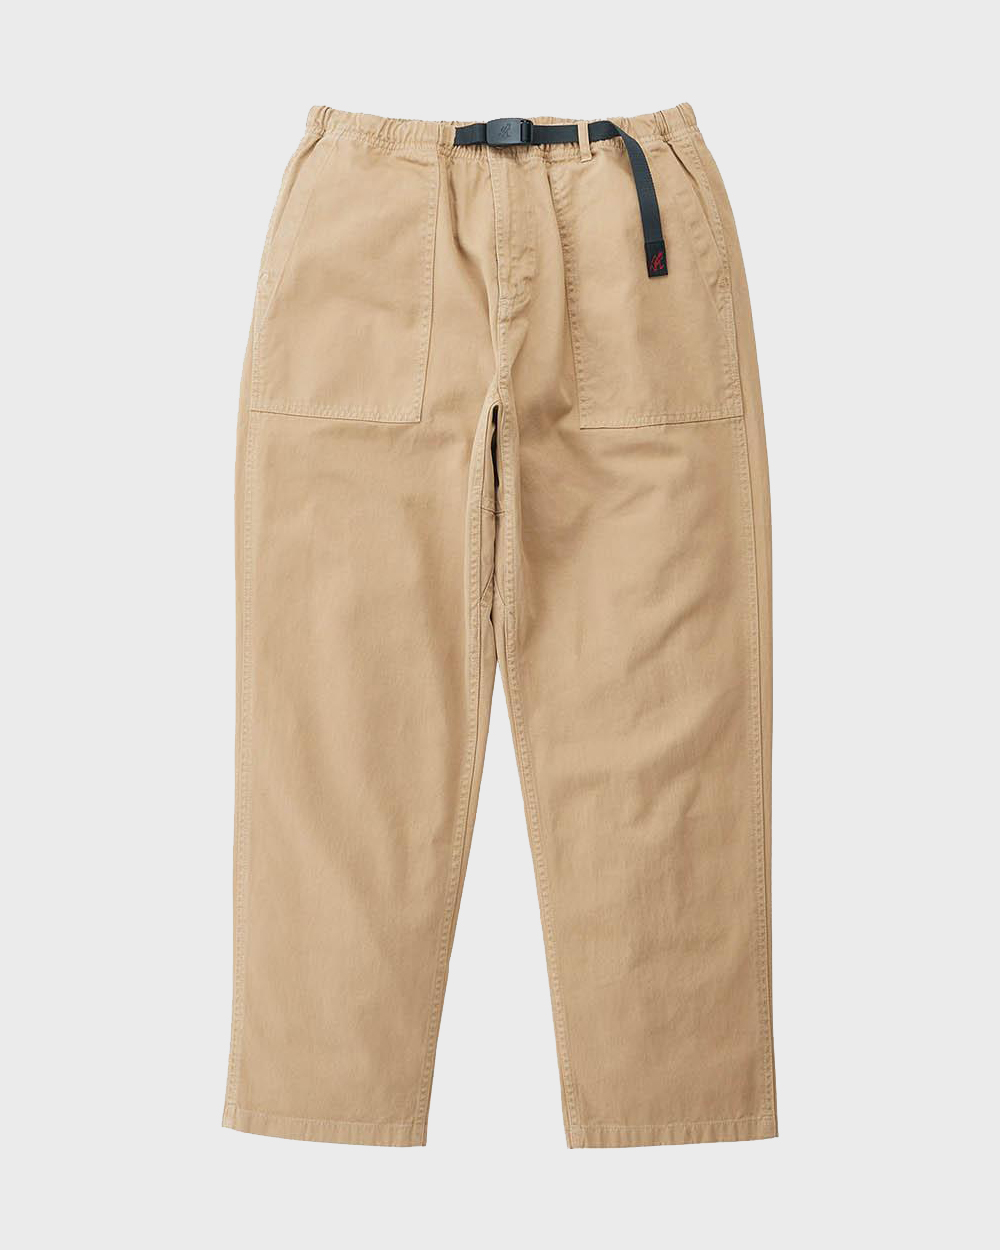 Loose Tapered Ridge Pants (Chino)